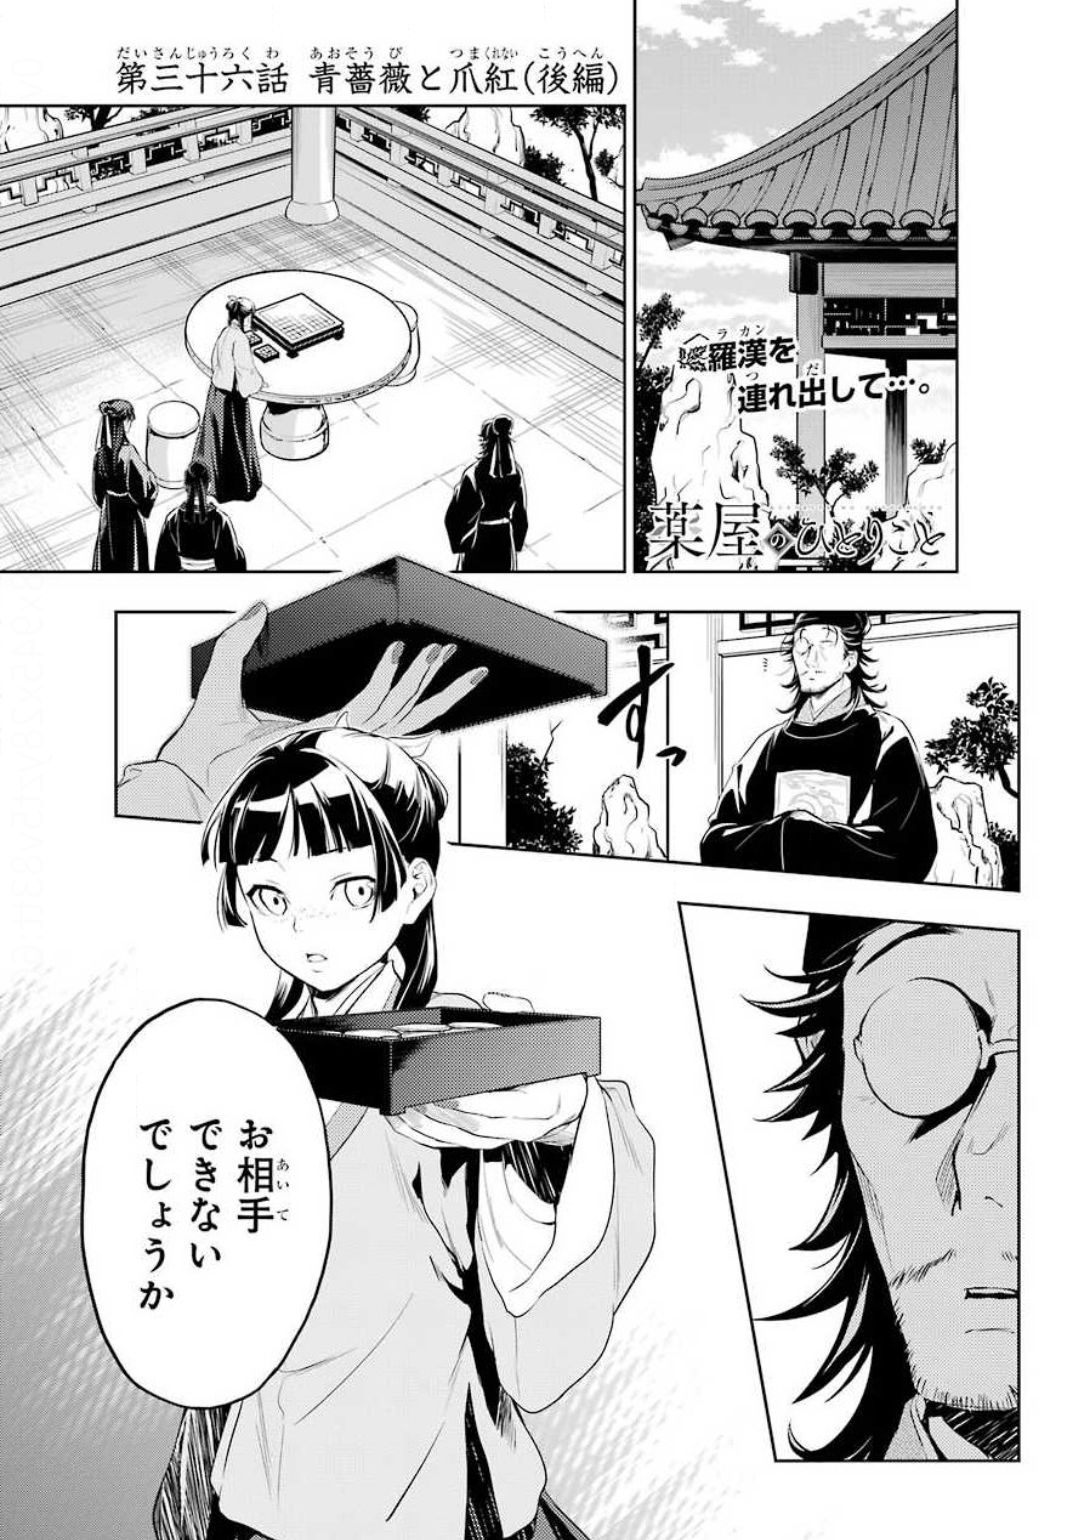 Kusuriya no Hitorigoto - Chapter 36.3 - Page 1